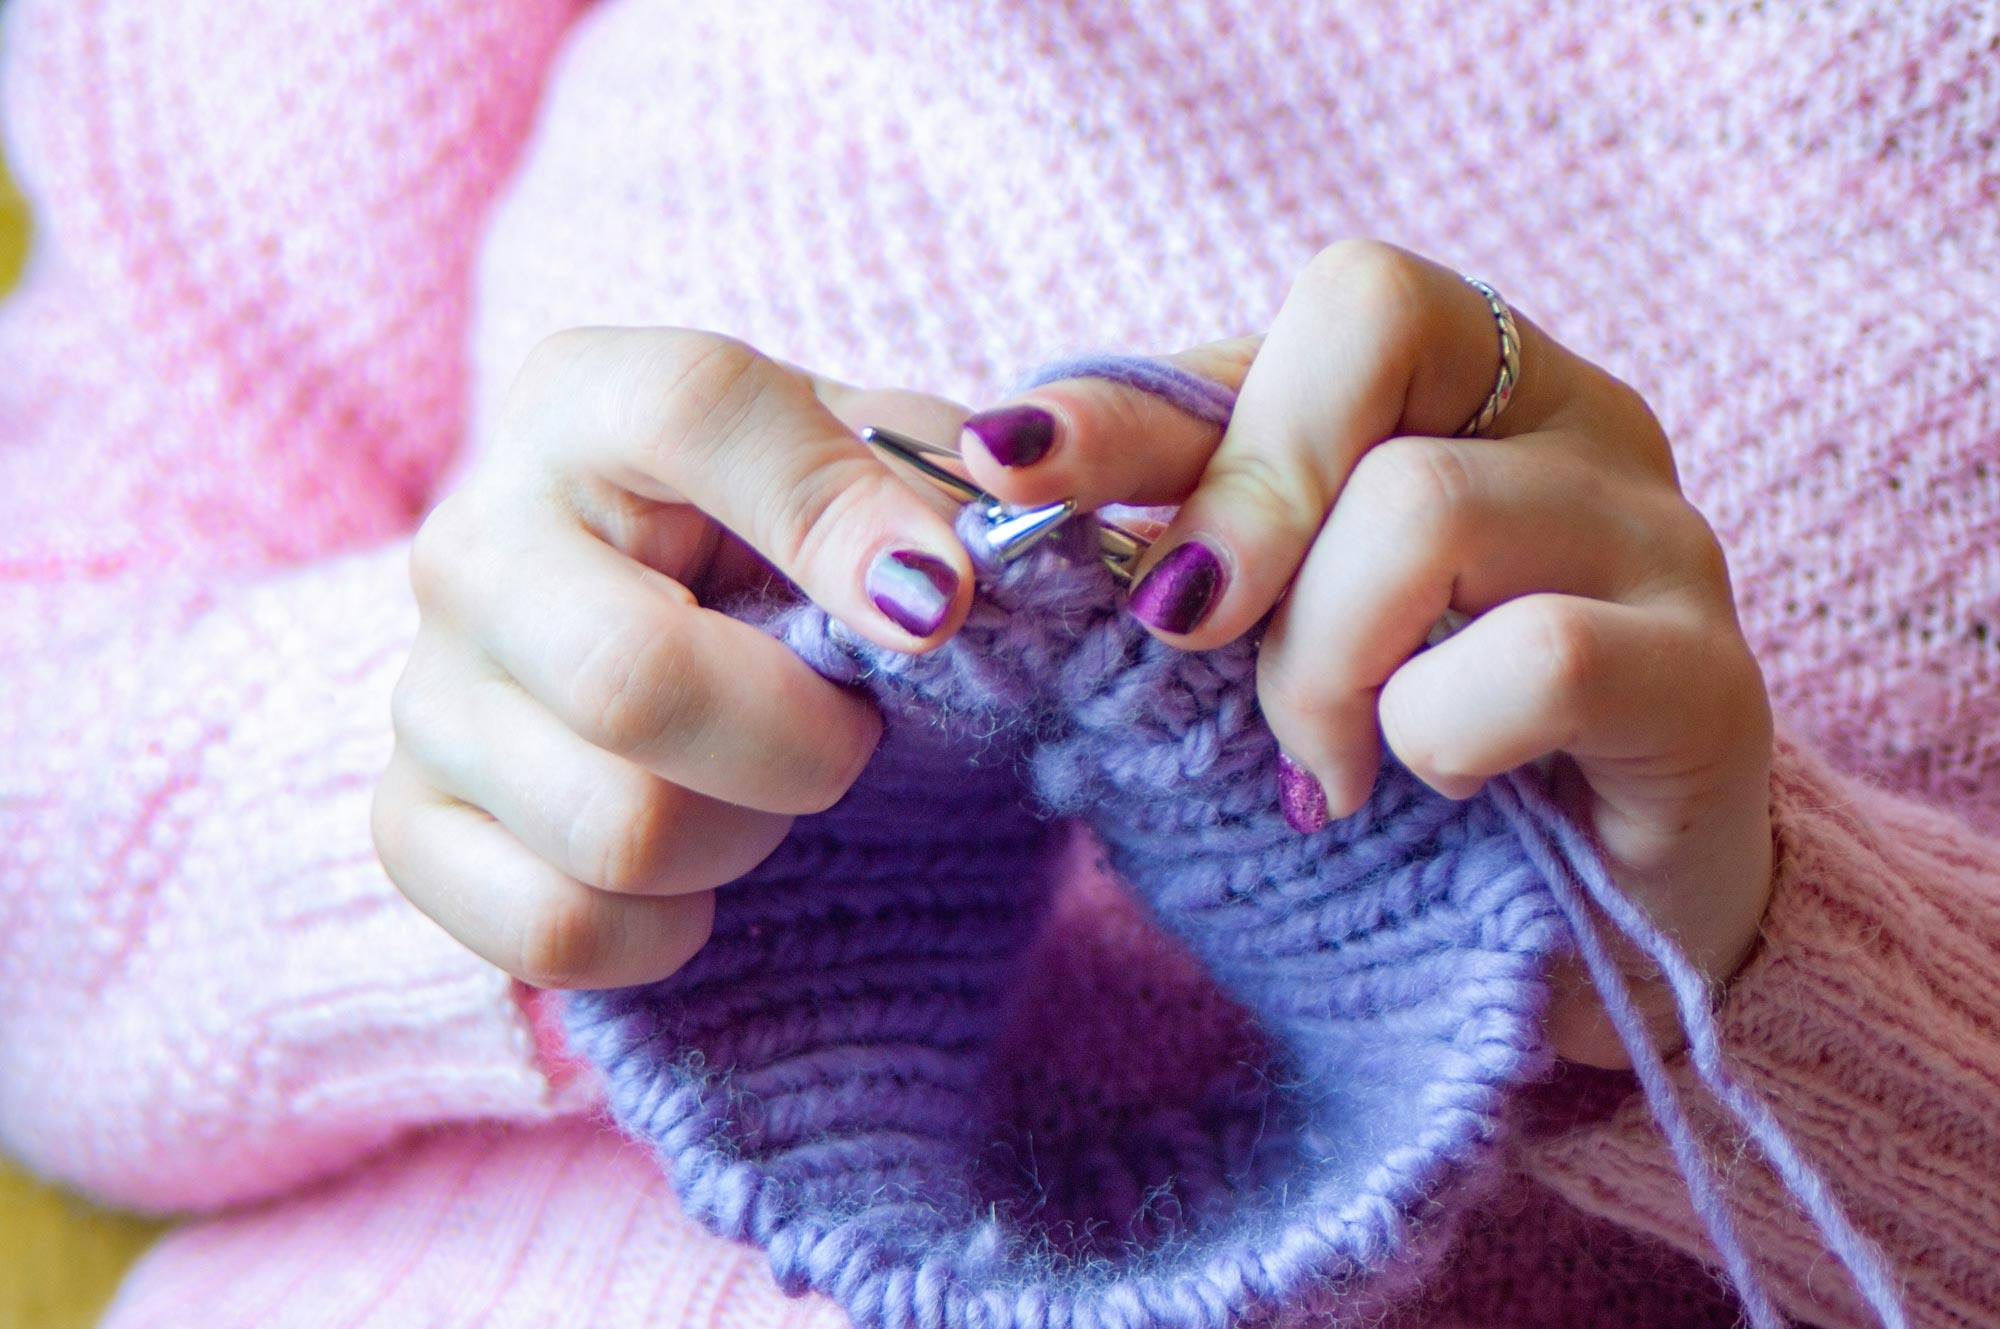  Vrouw die een paarse wollen sweater breit